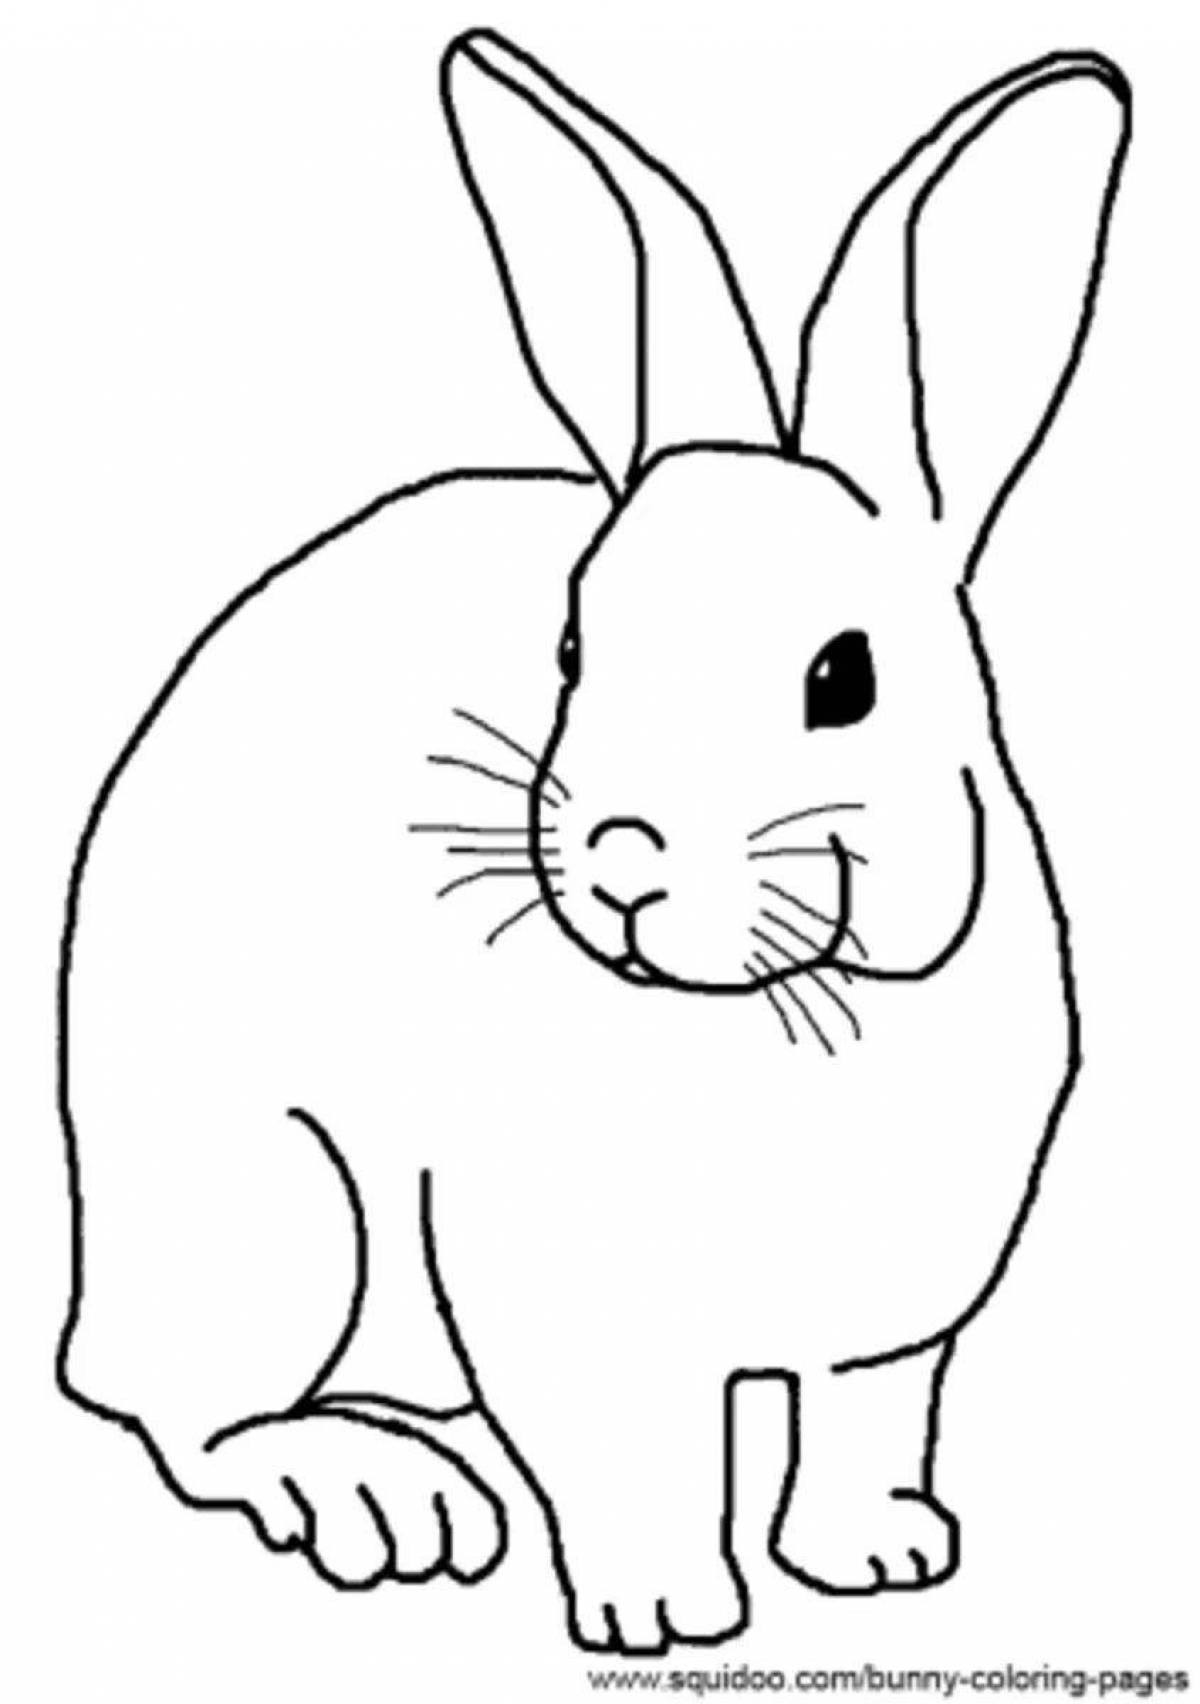 Shiny angora rabbit coloring page